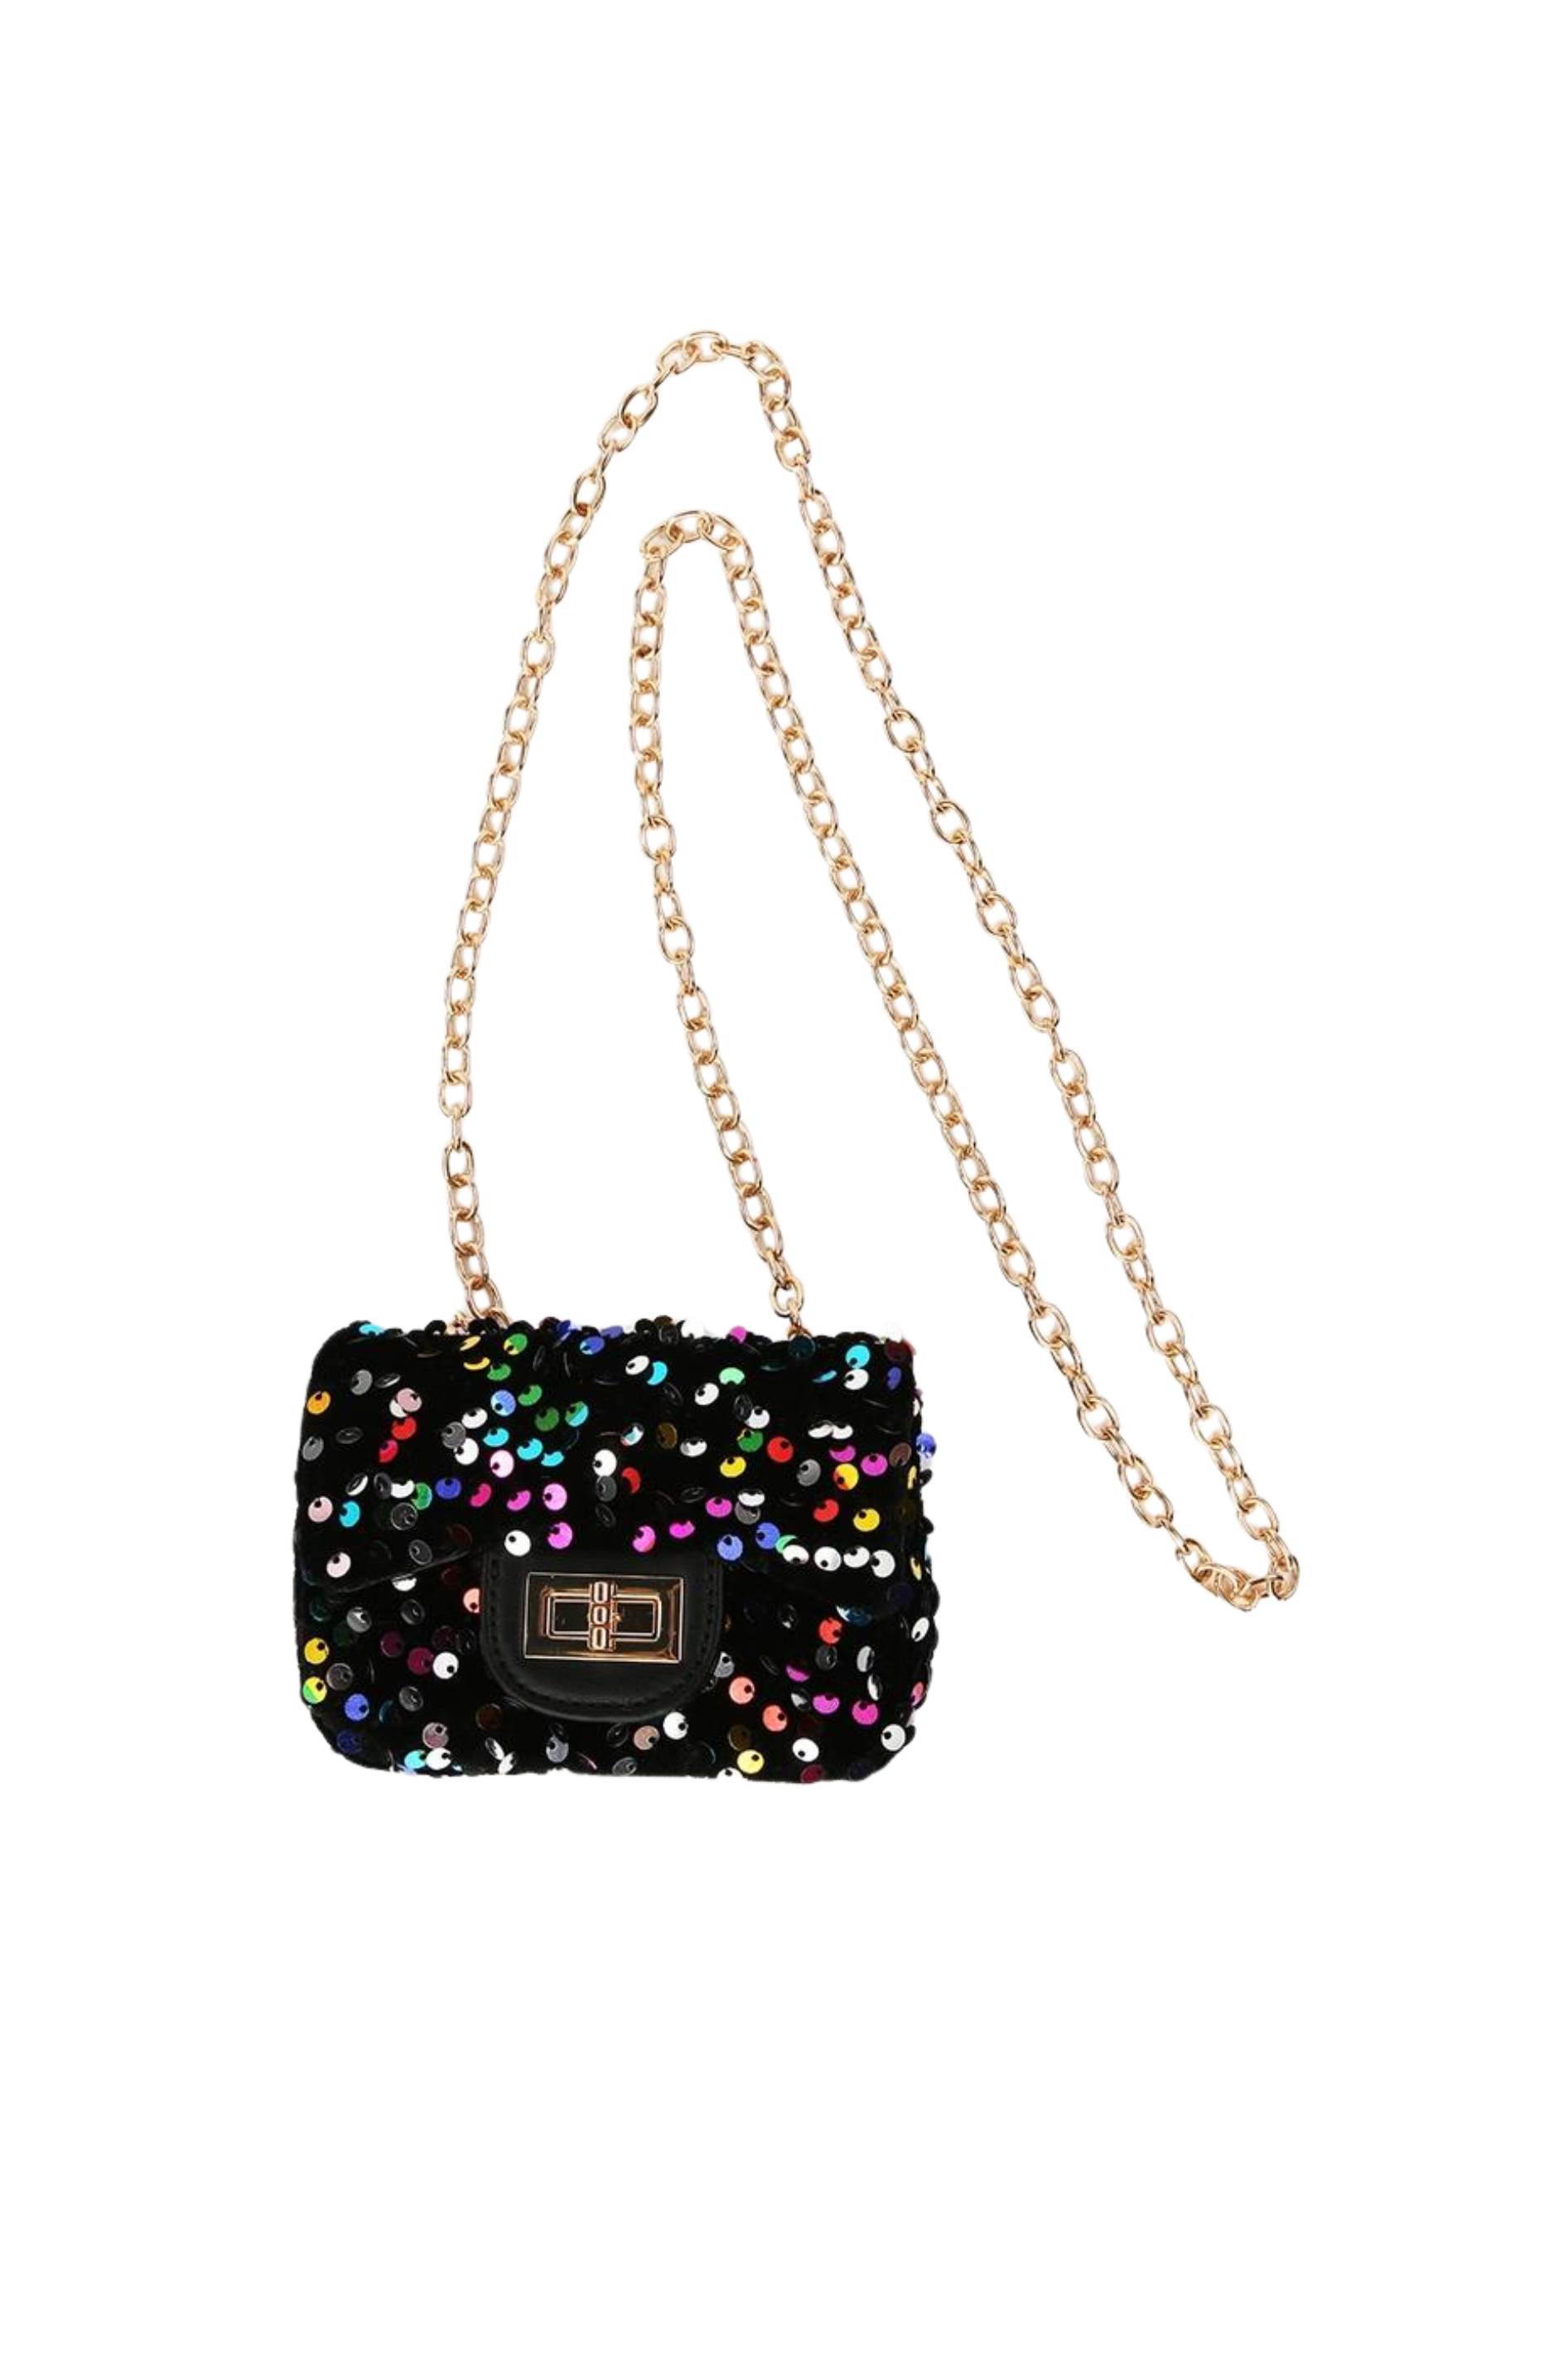 Monogram coach purse. Rainbow color handbag | Purses, Handbag, Coach purses